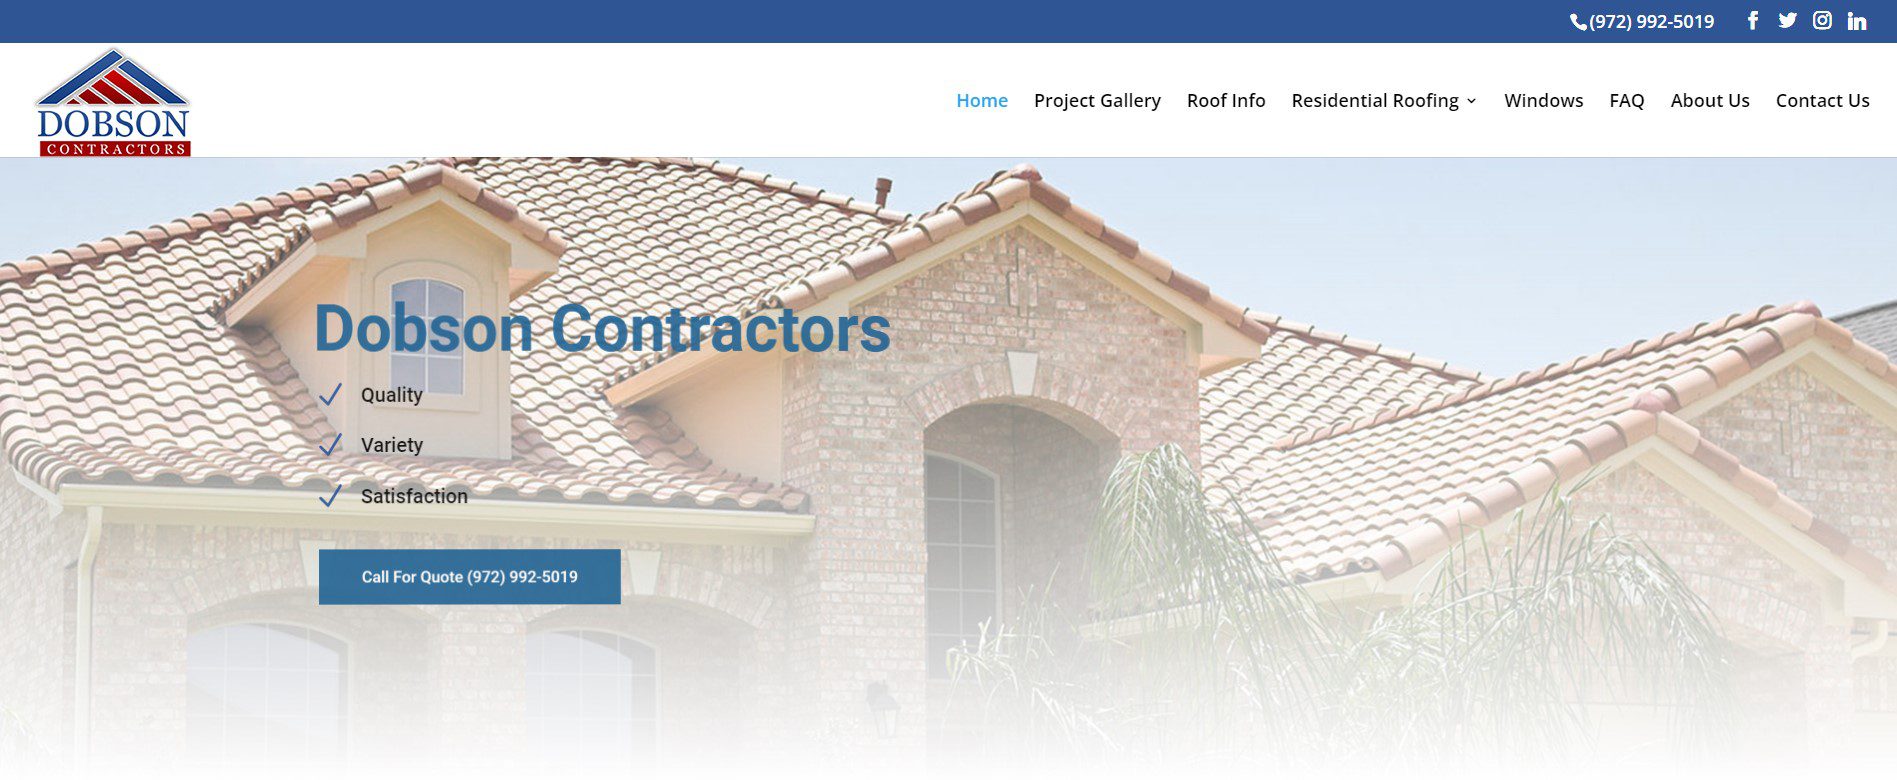 Dobson Contractors Homepage